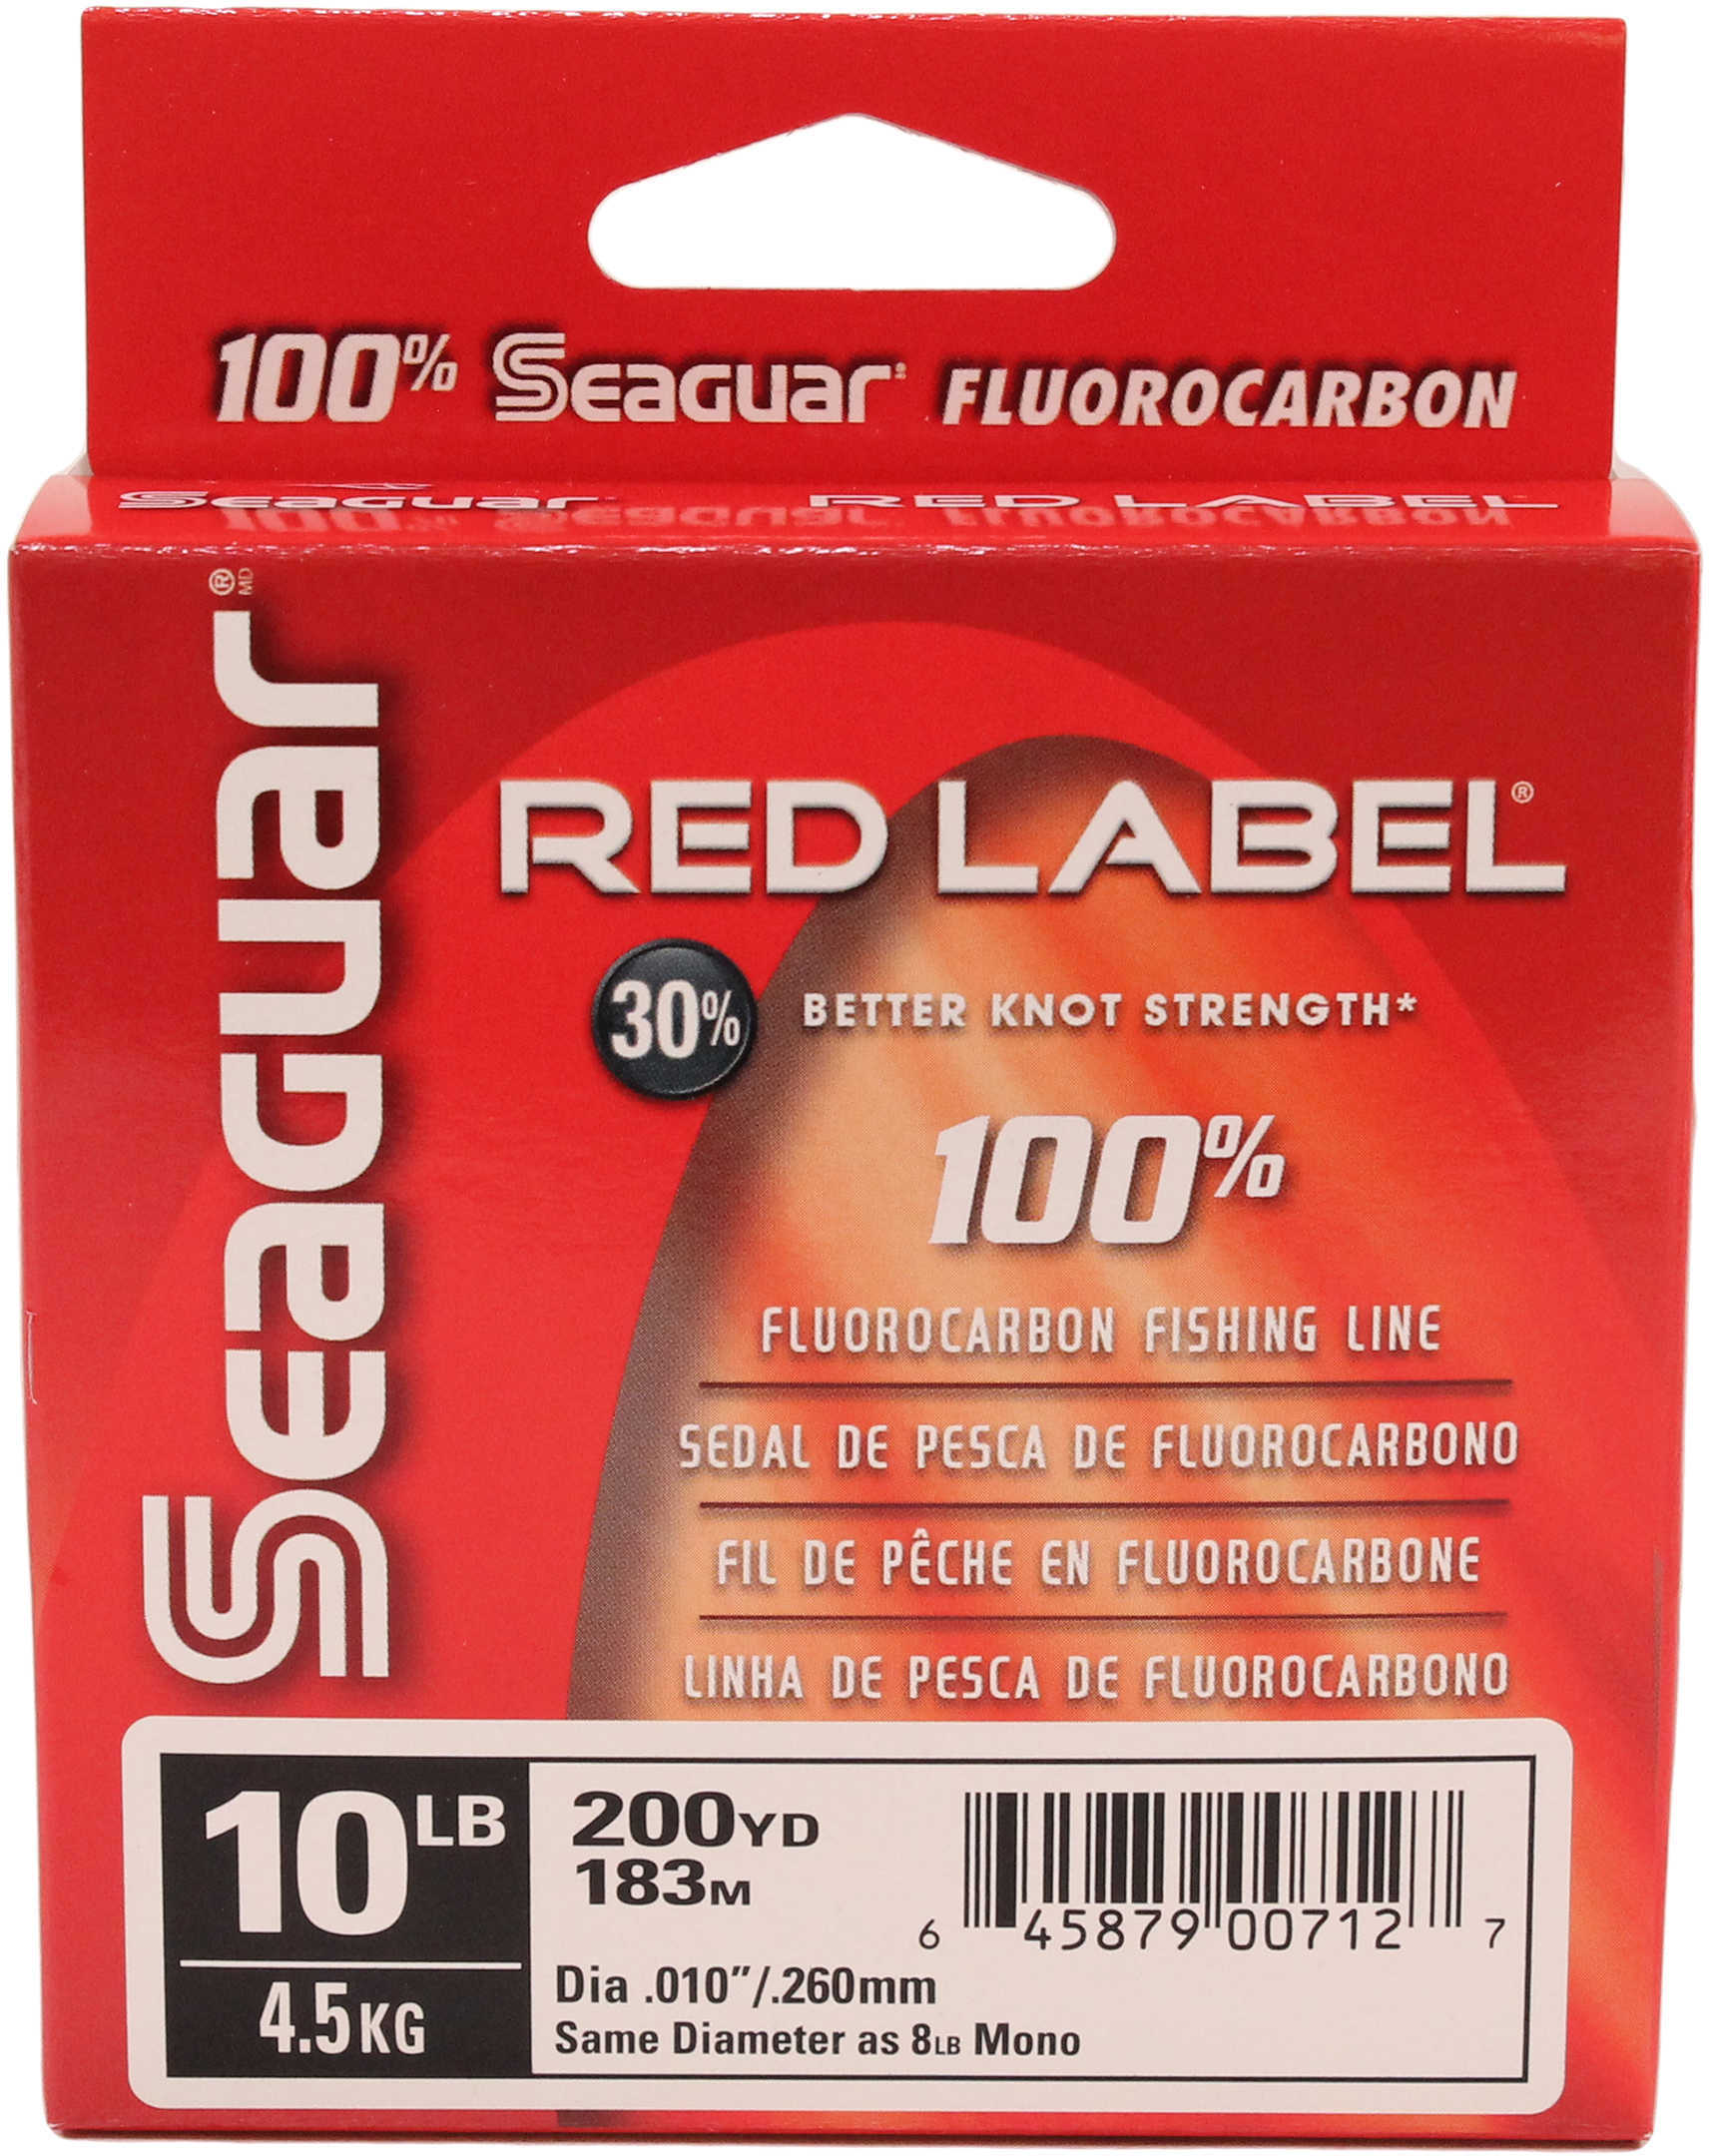 Seaguar Red Label 100% Fluoro 250Yd 10Lb 10Rm250